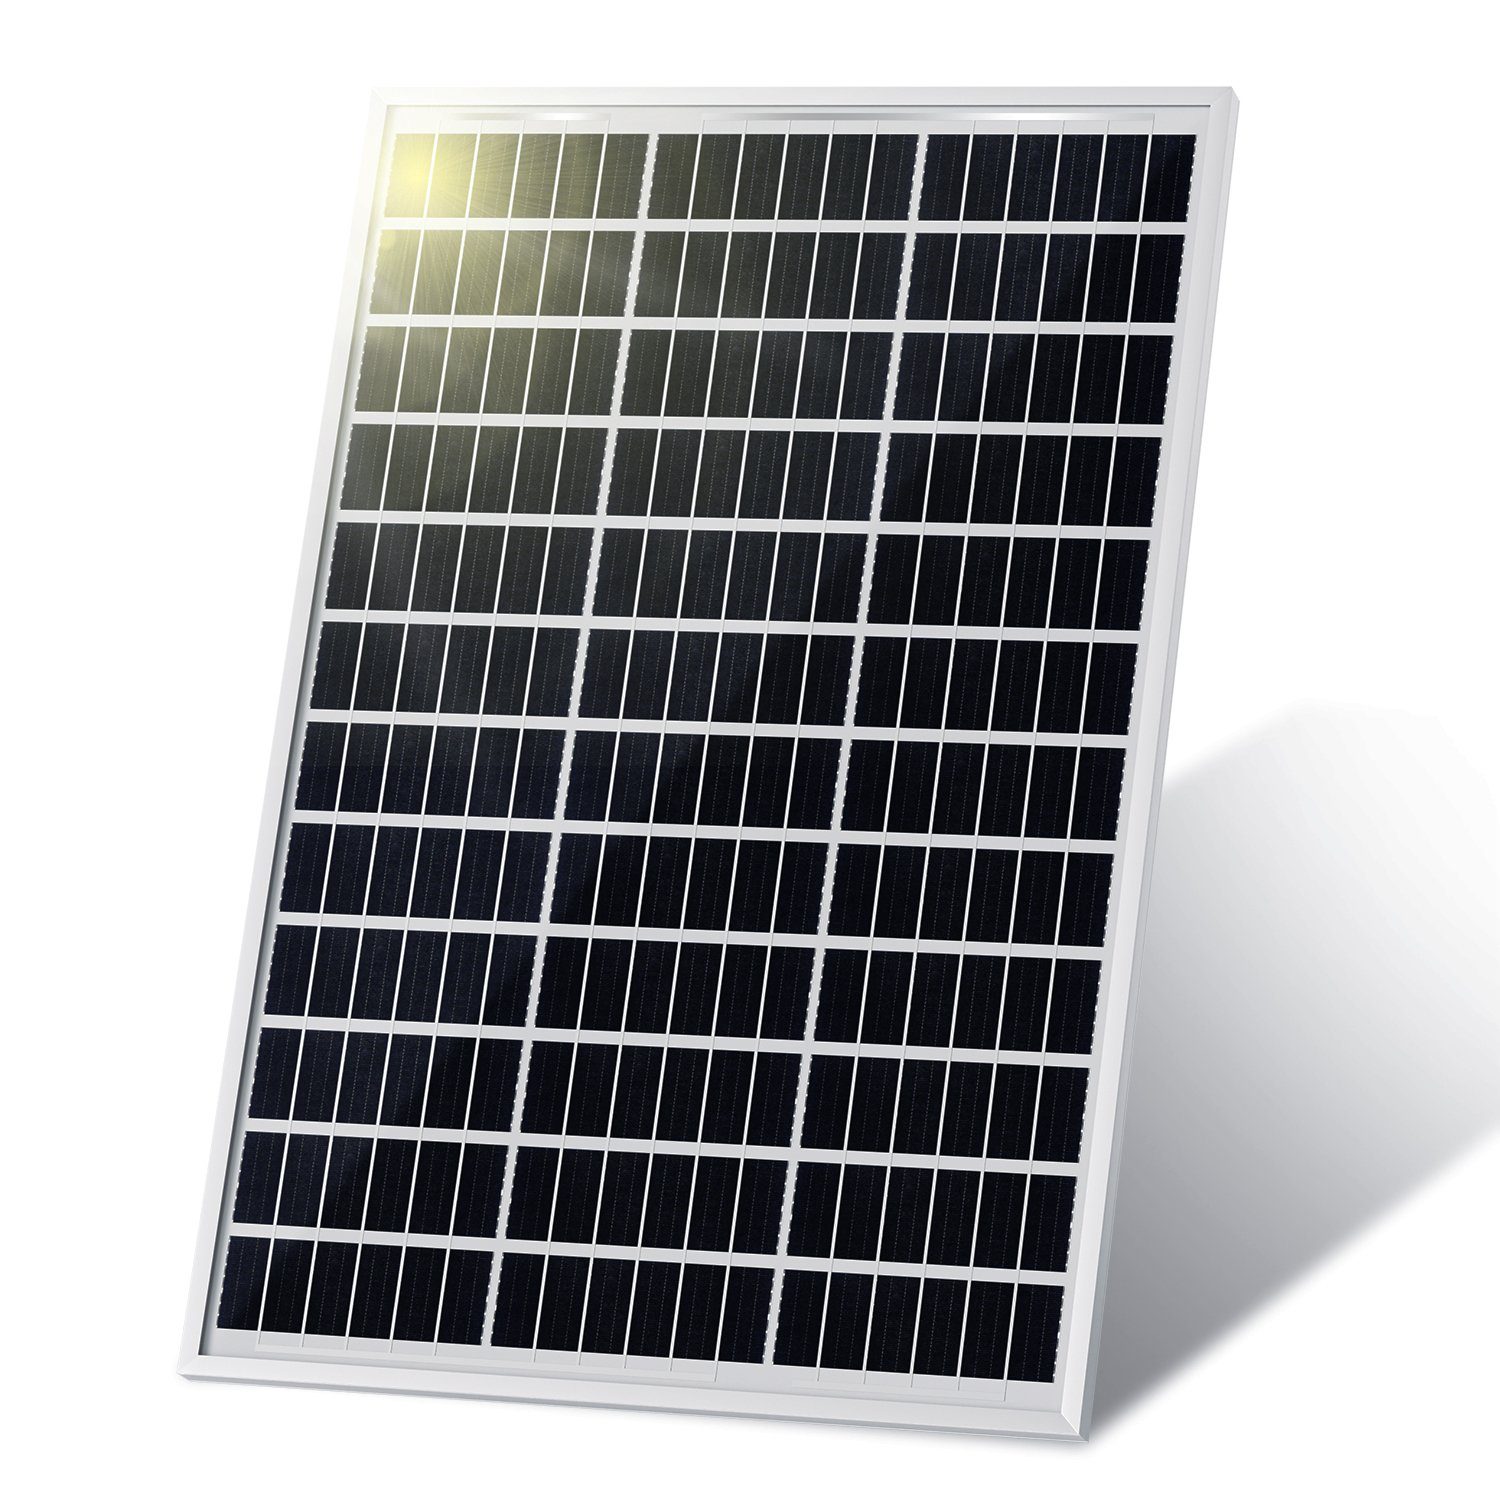 Gimisgu Solaranlage Solarpanel 100W für Solarmodul, Powerstation, Solarladegerät, W 100